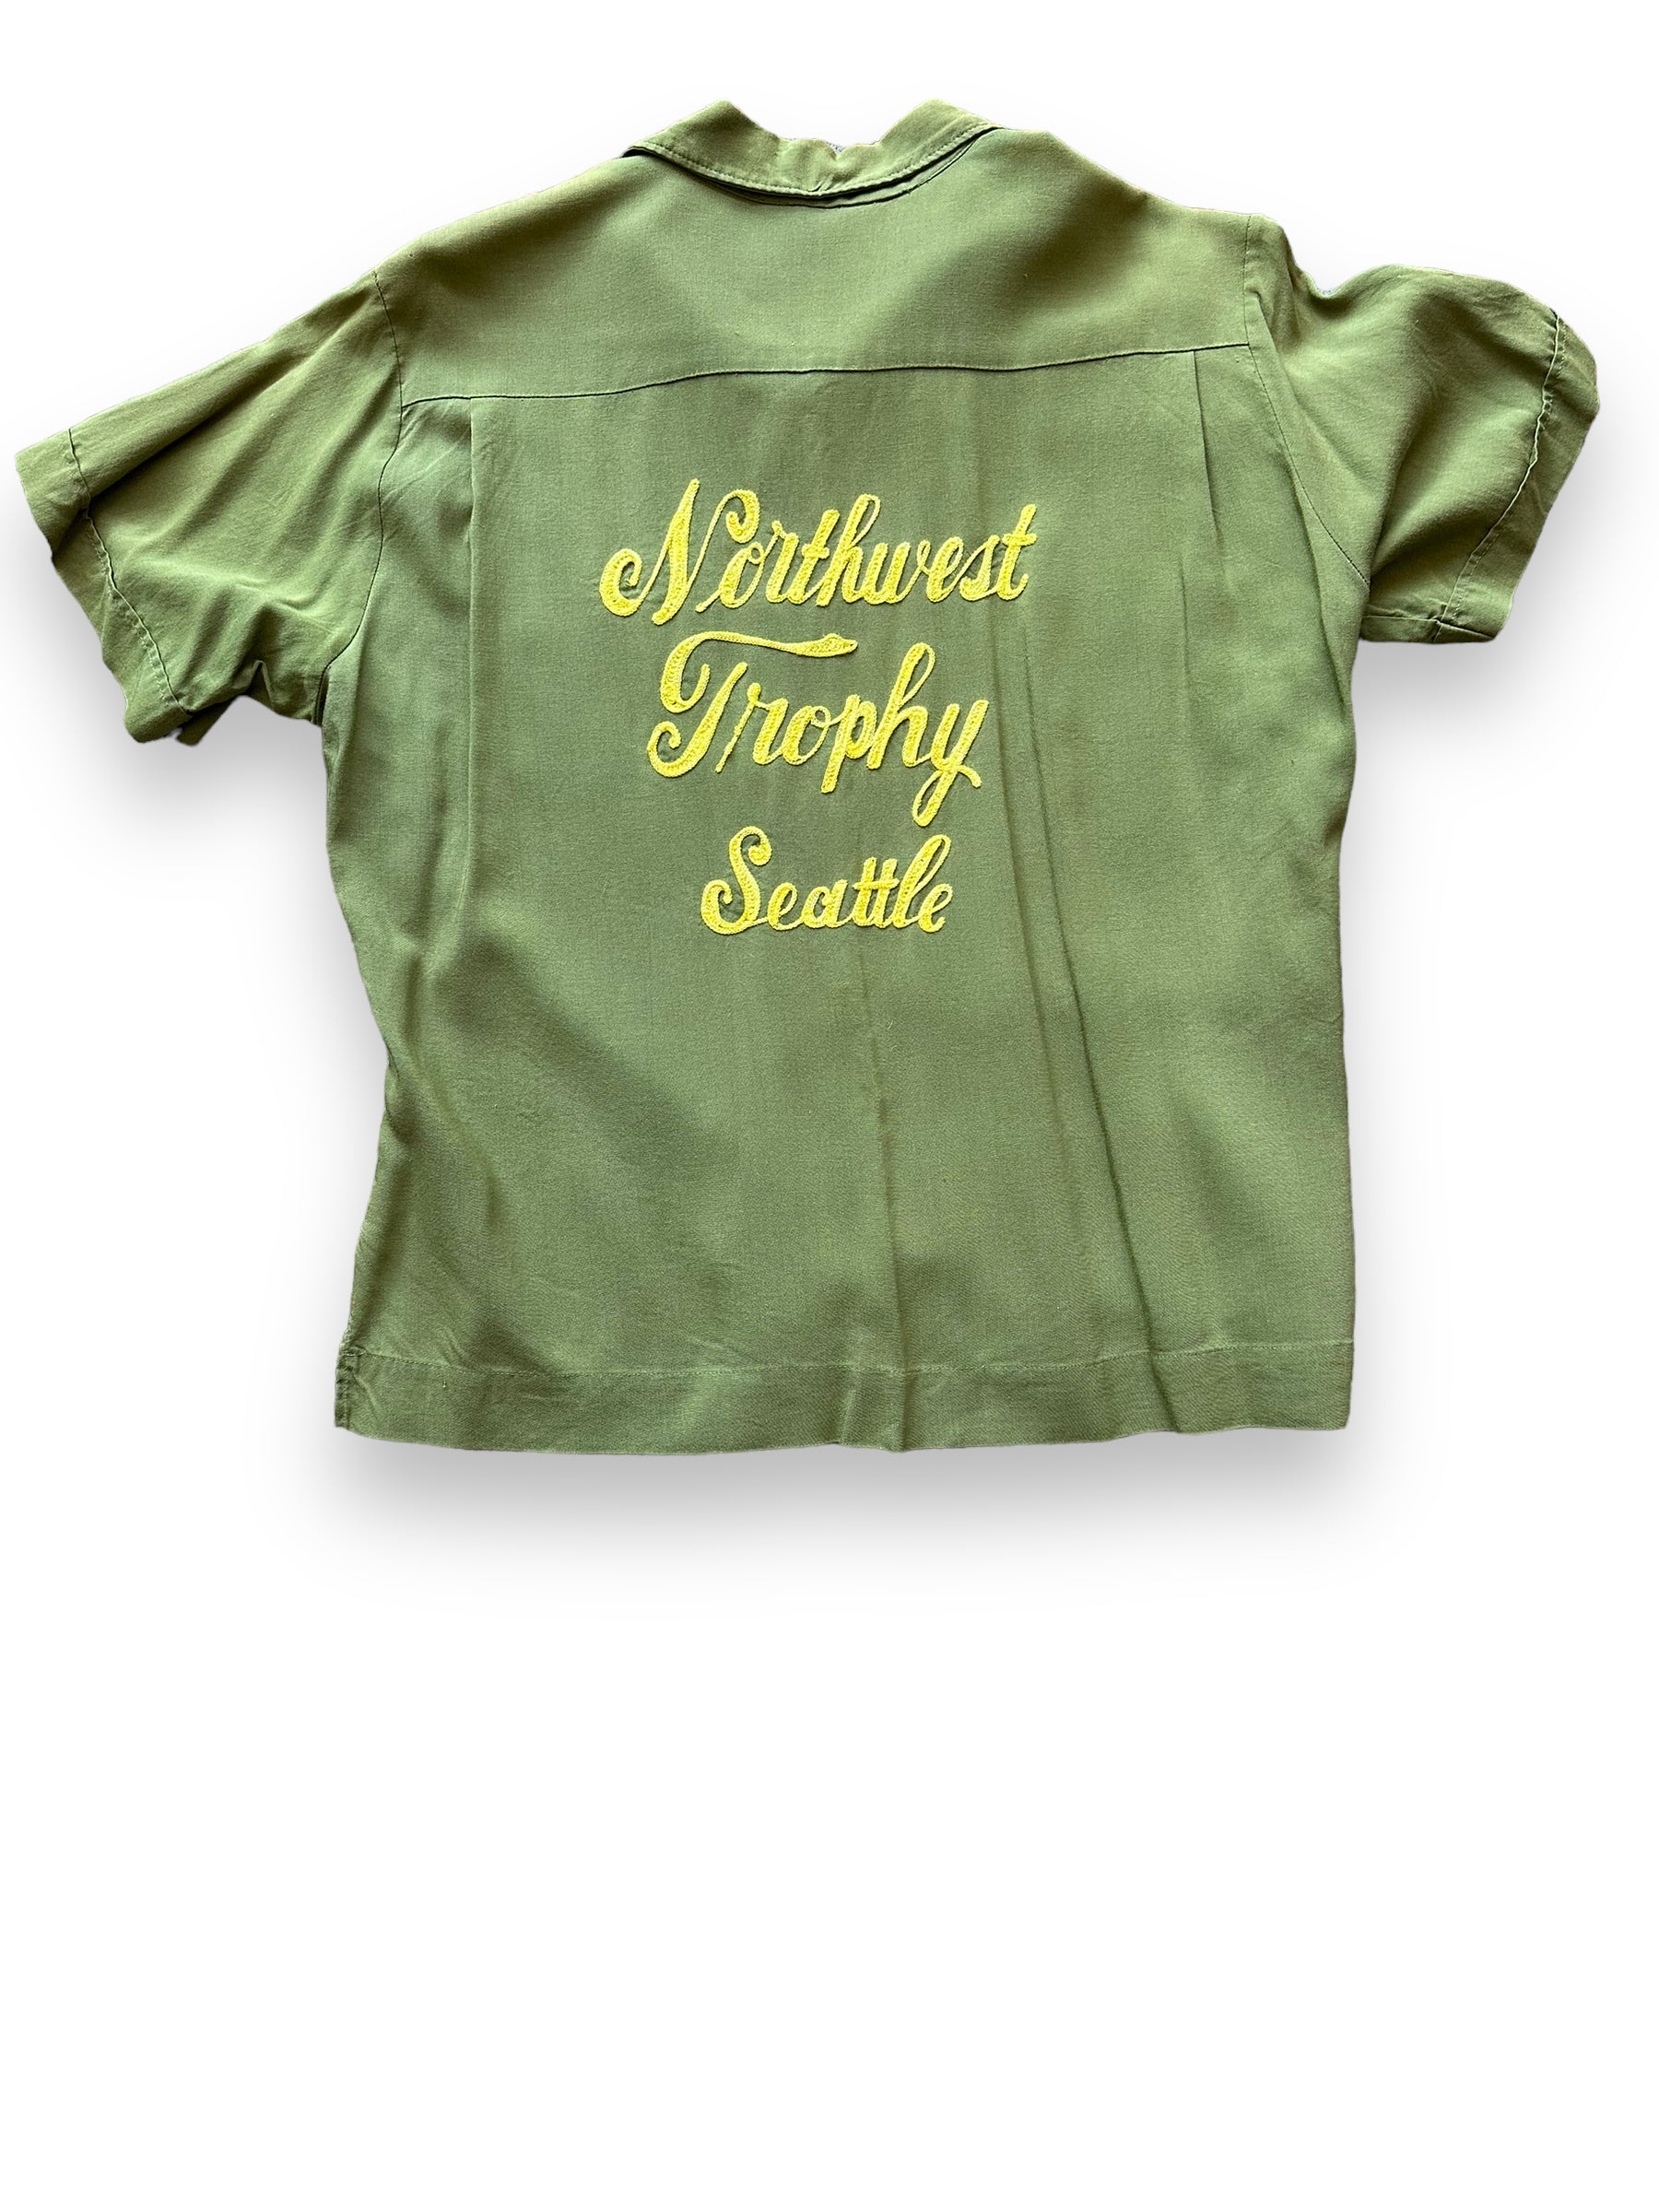 Rear View of Vintage Northwest Trophy Seattle Bowling Shirt SZ M | Vintage Bowling Shirt Seattle | Barn Owl Vintage Seattle